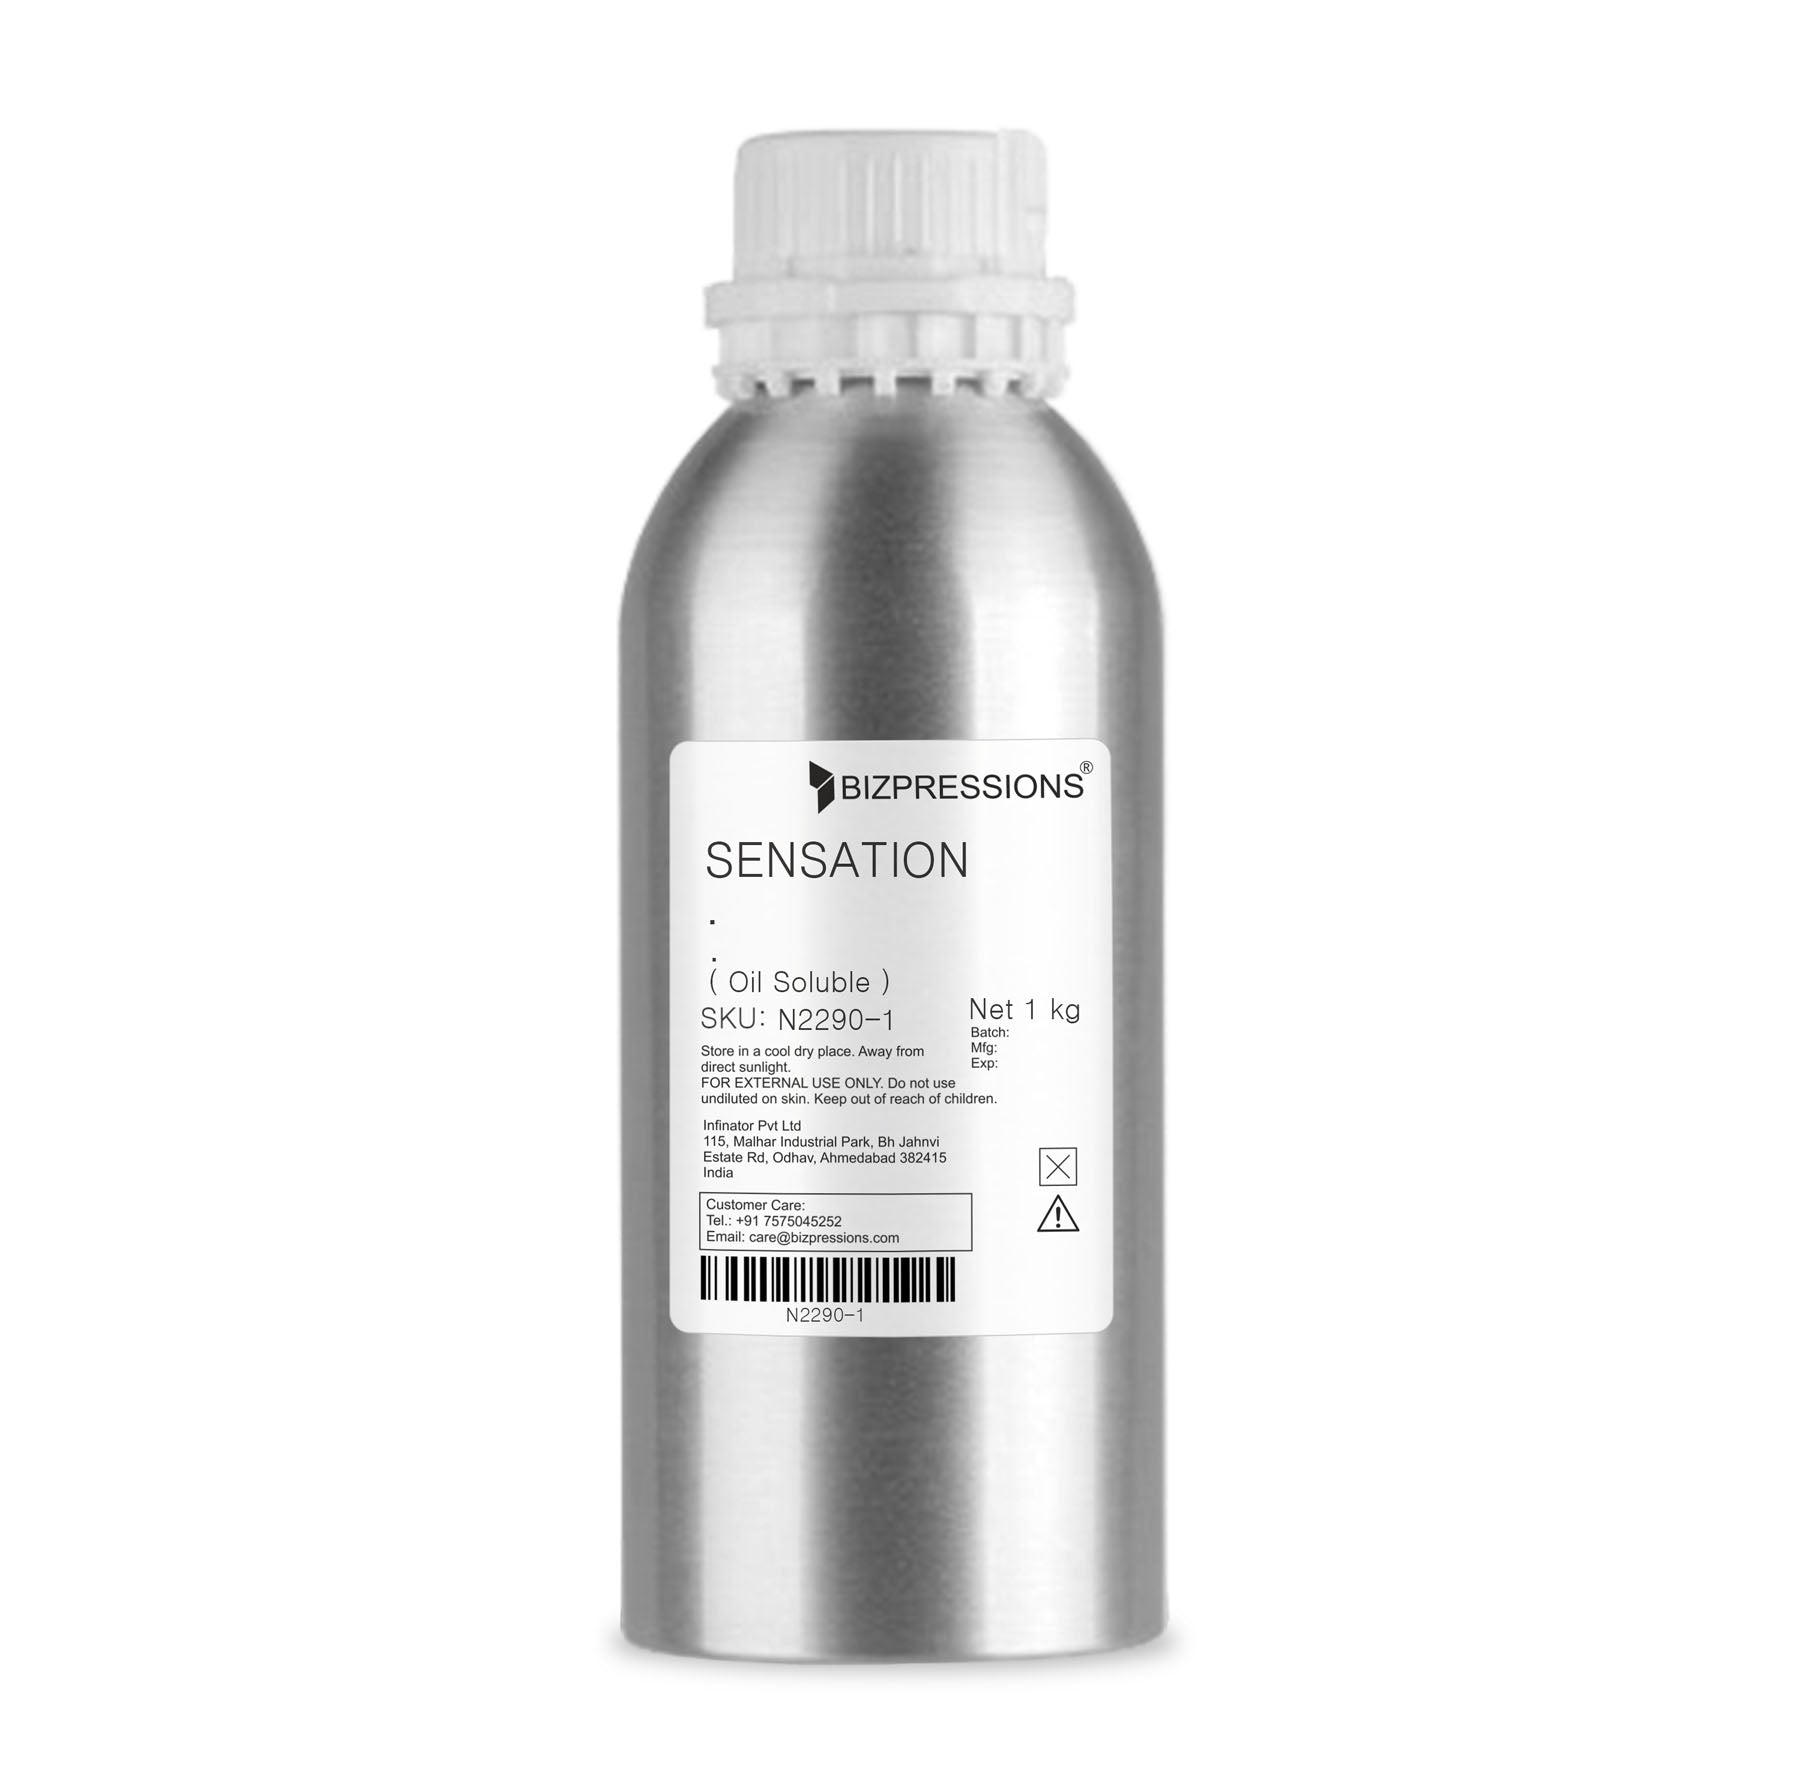 SENSATION - Fragrance ( Oil Soluble ) - 1 kg